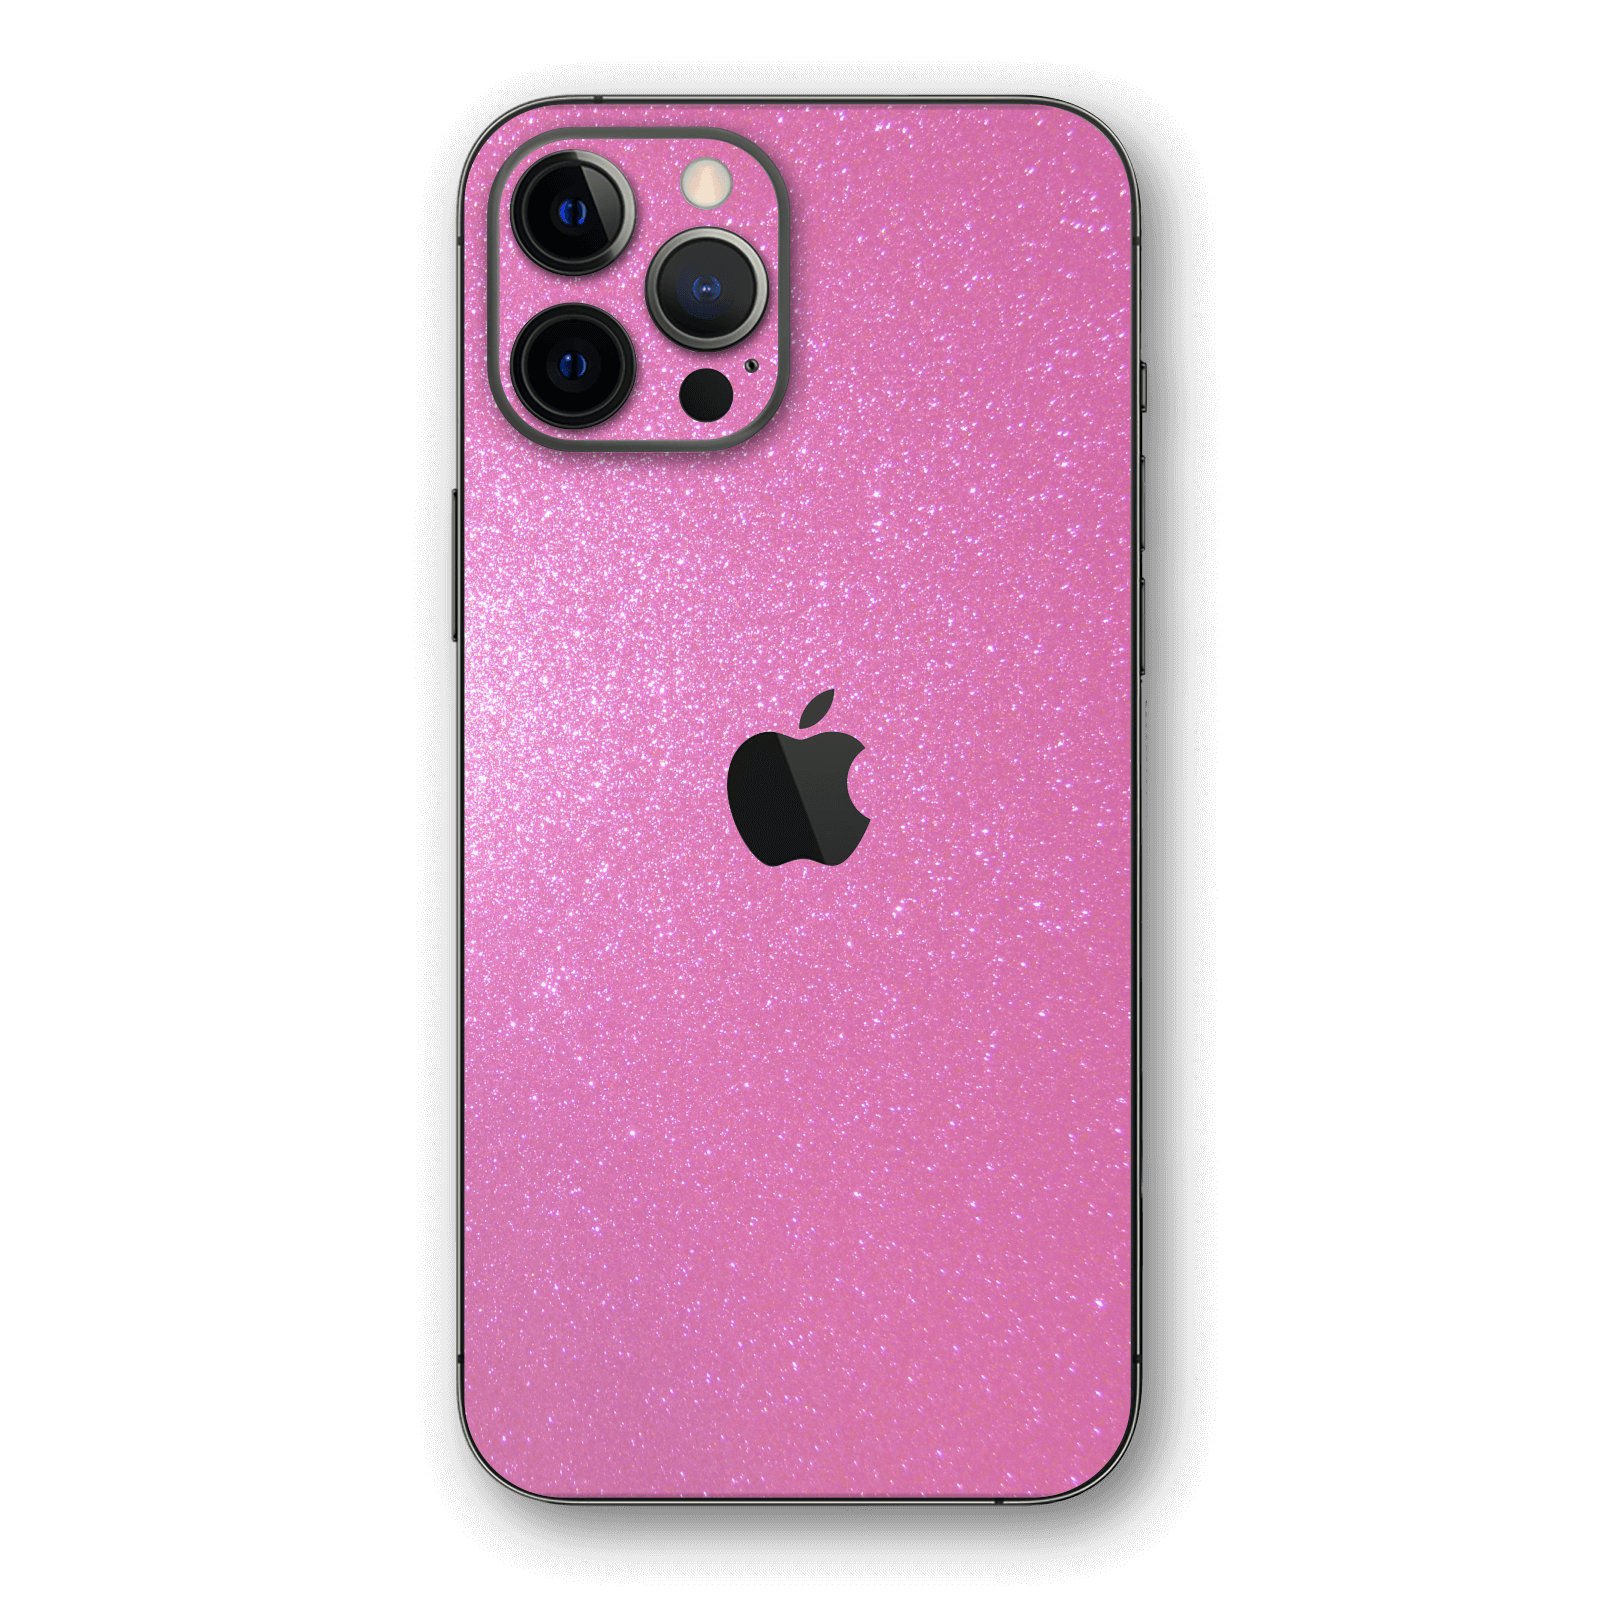 Iphone 12 Pro Max Diamond Pink Skin Wrap Easyskinz